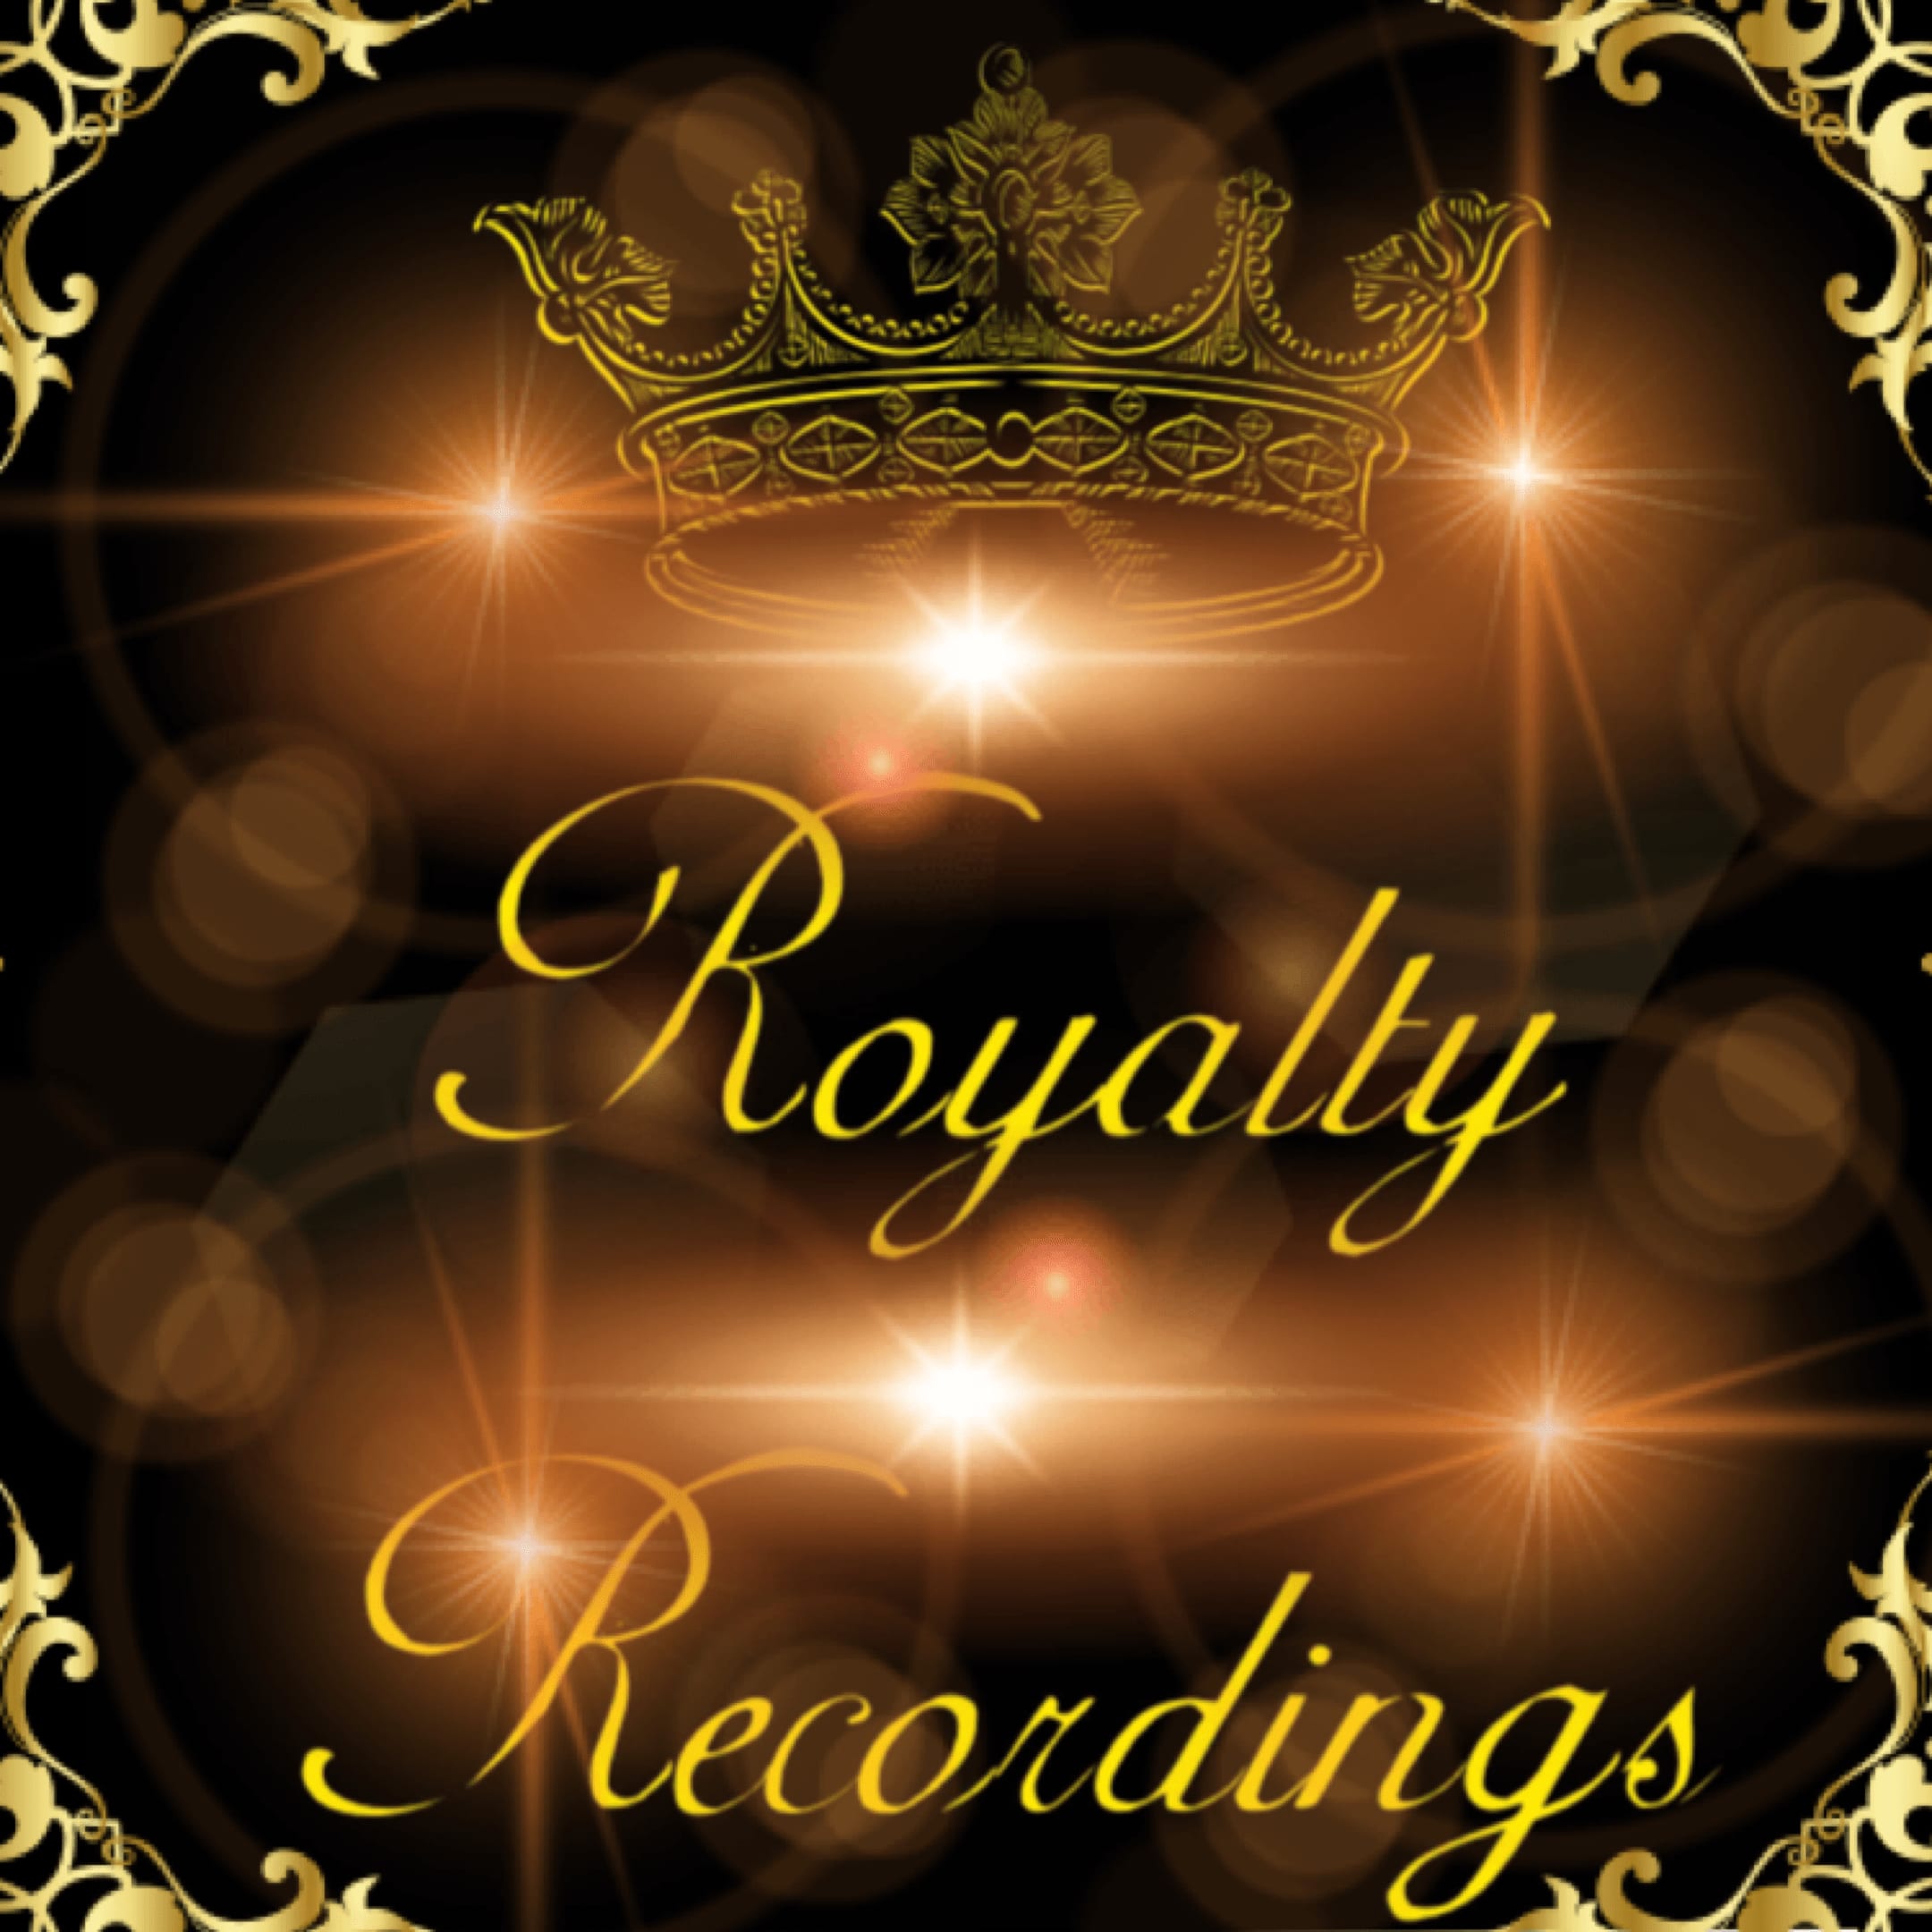 Royalty Recordings